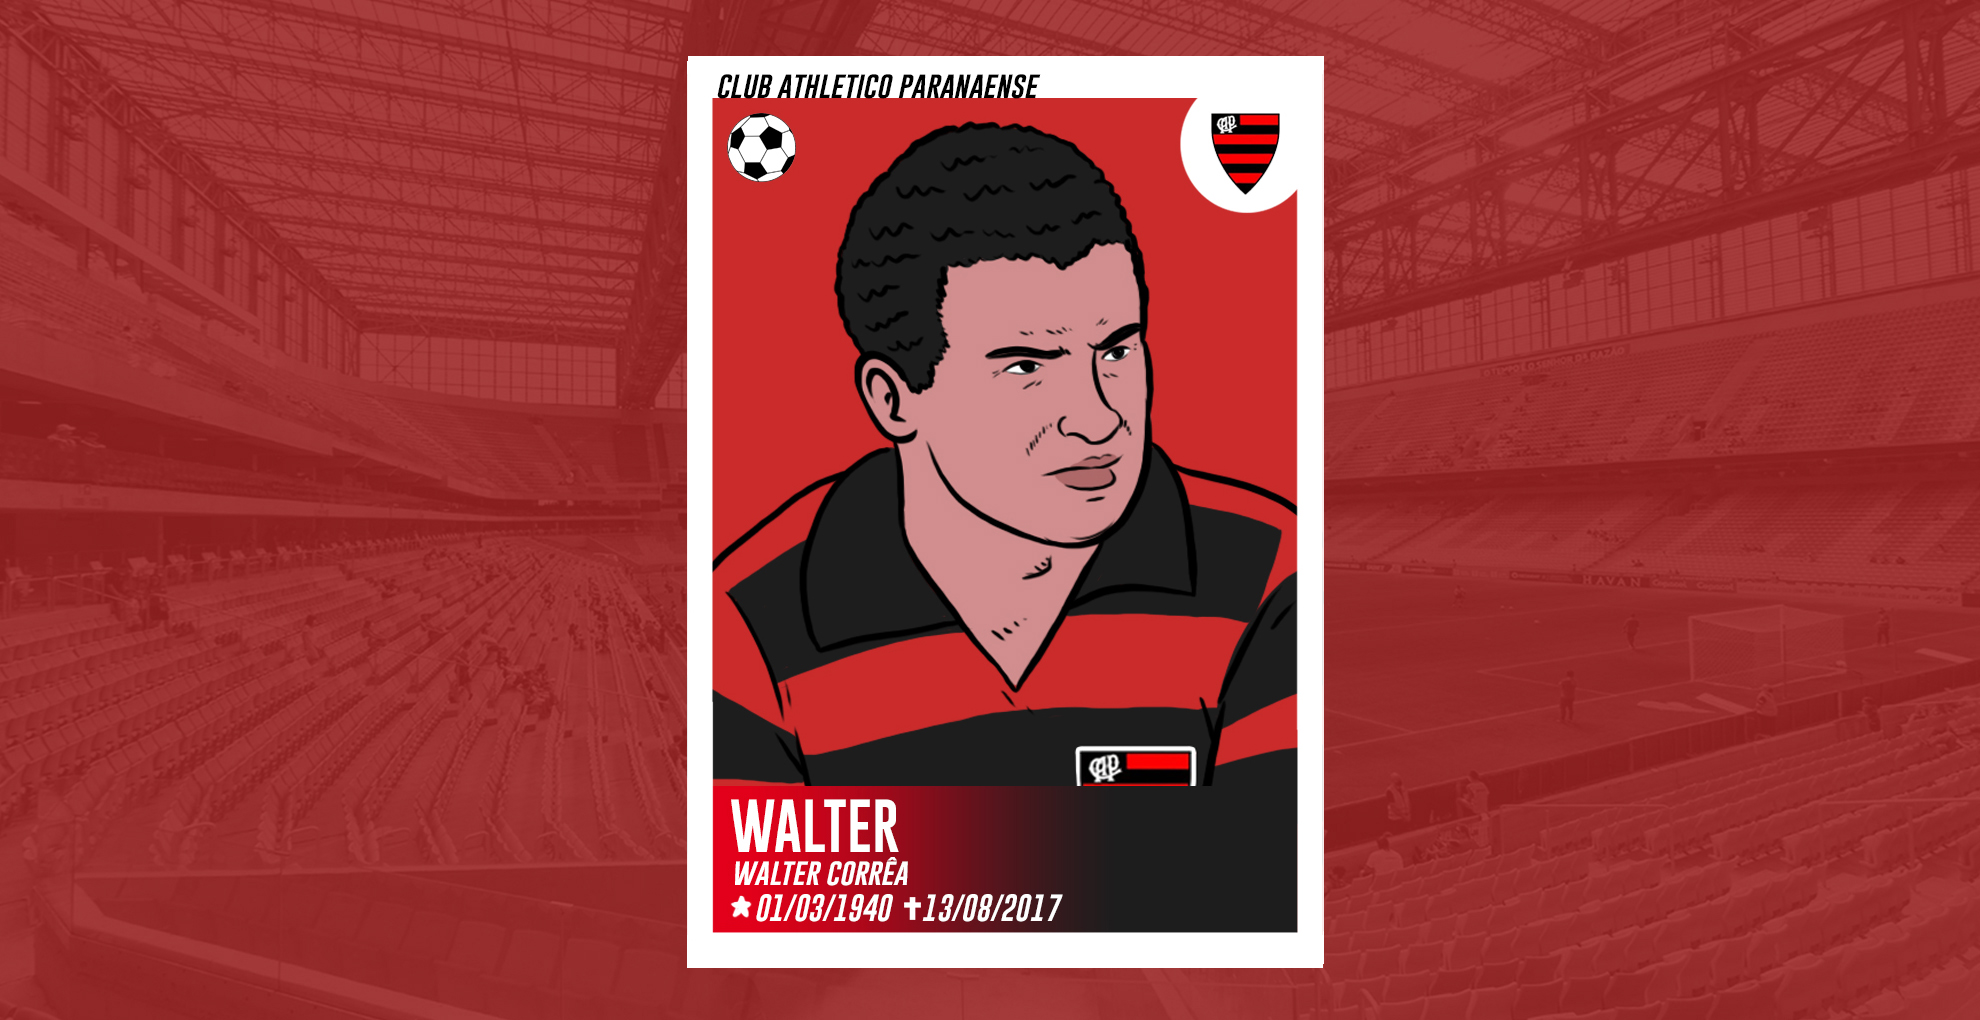  Walter, o goleador dos anos 1960 